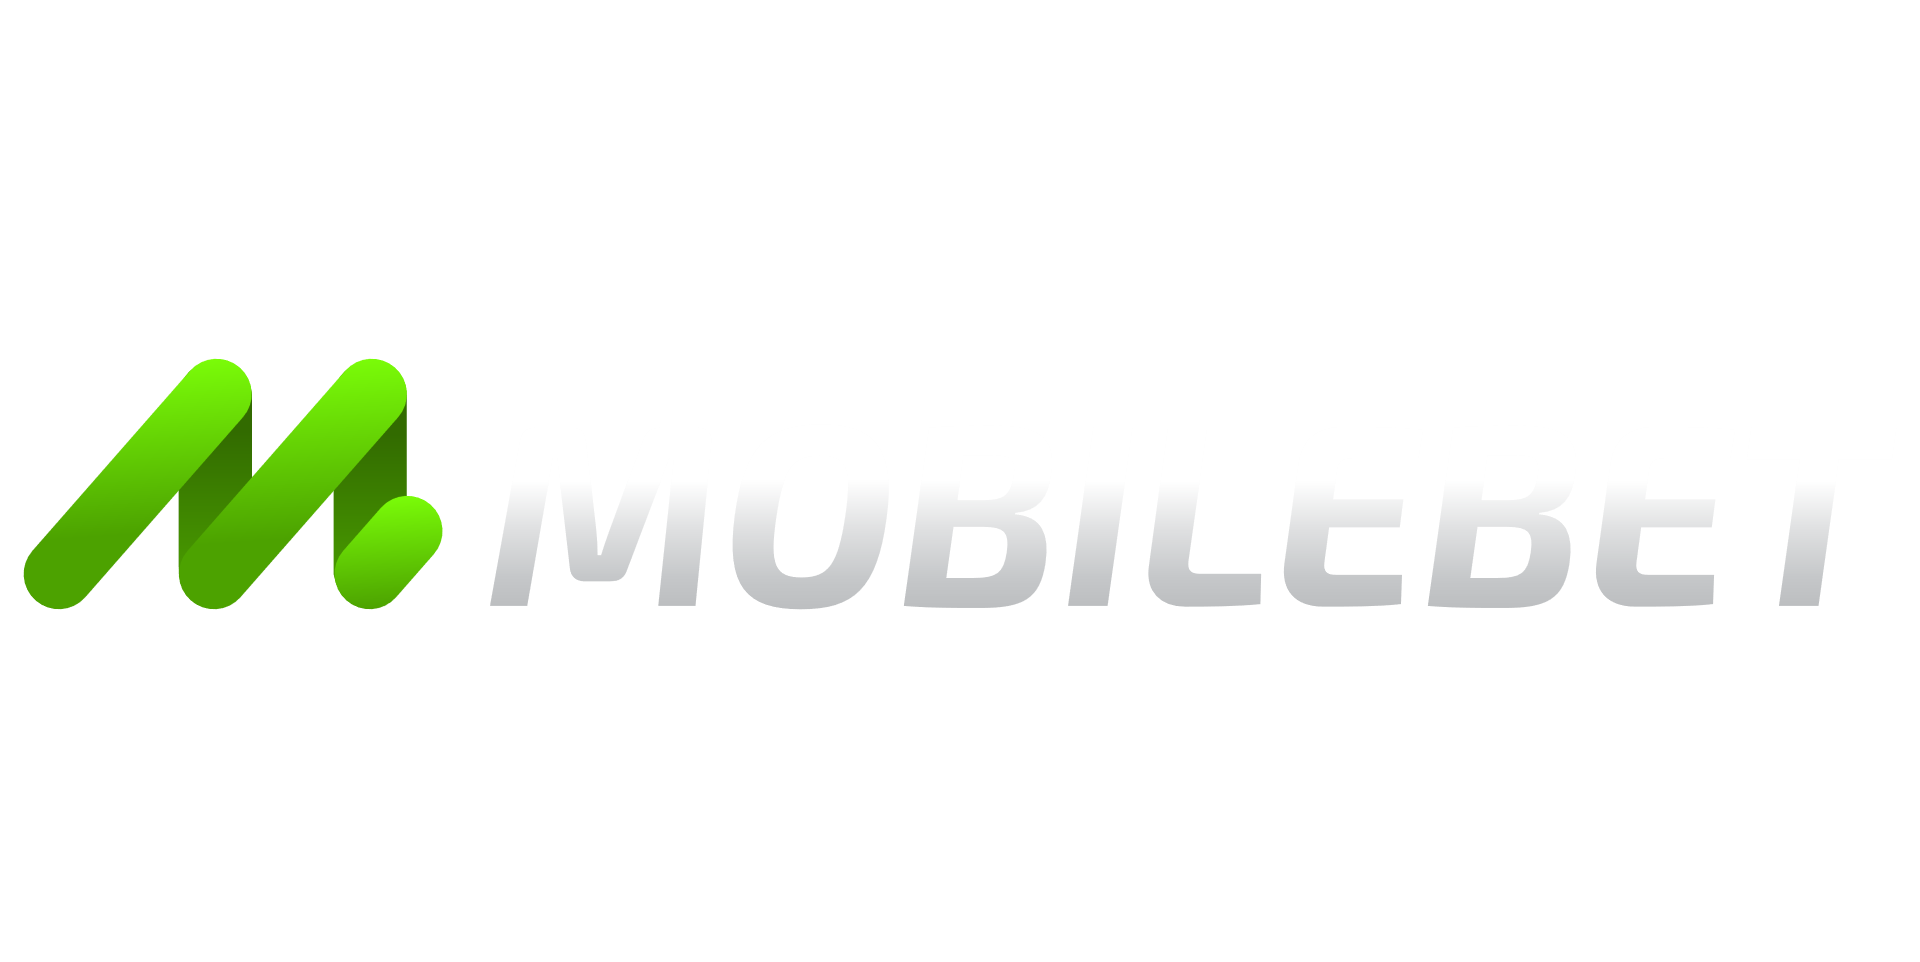 Mobilebet Logo